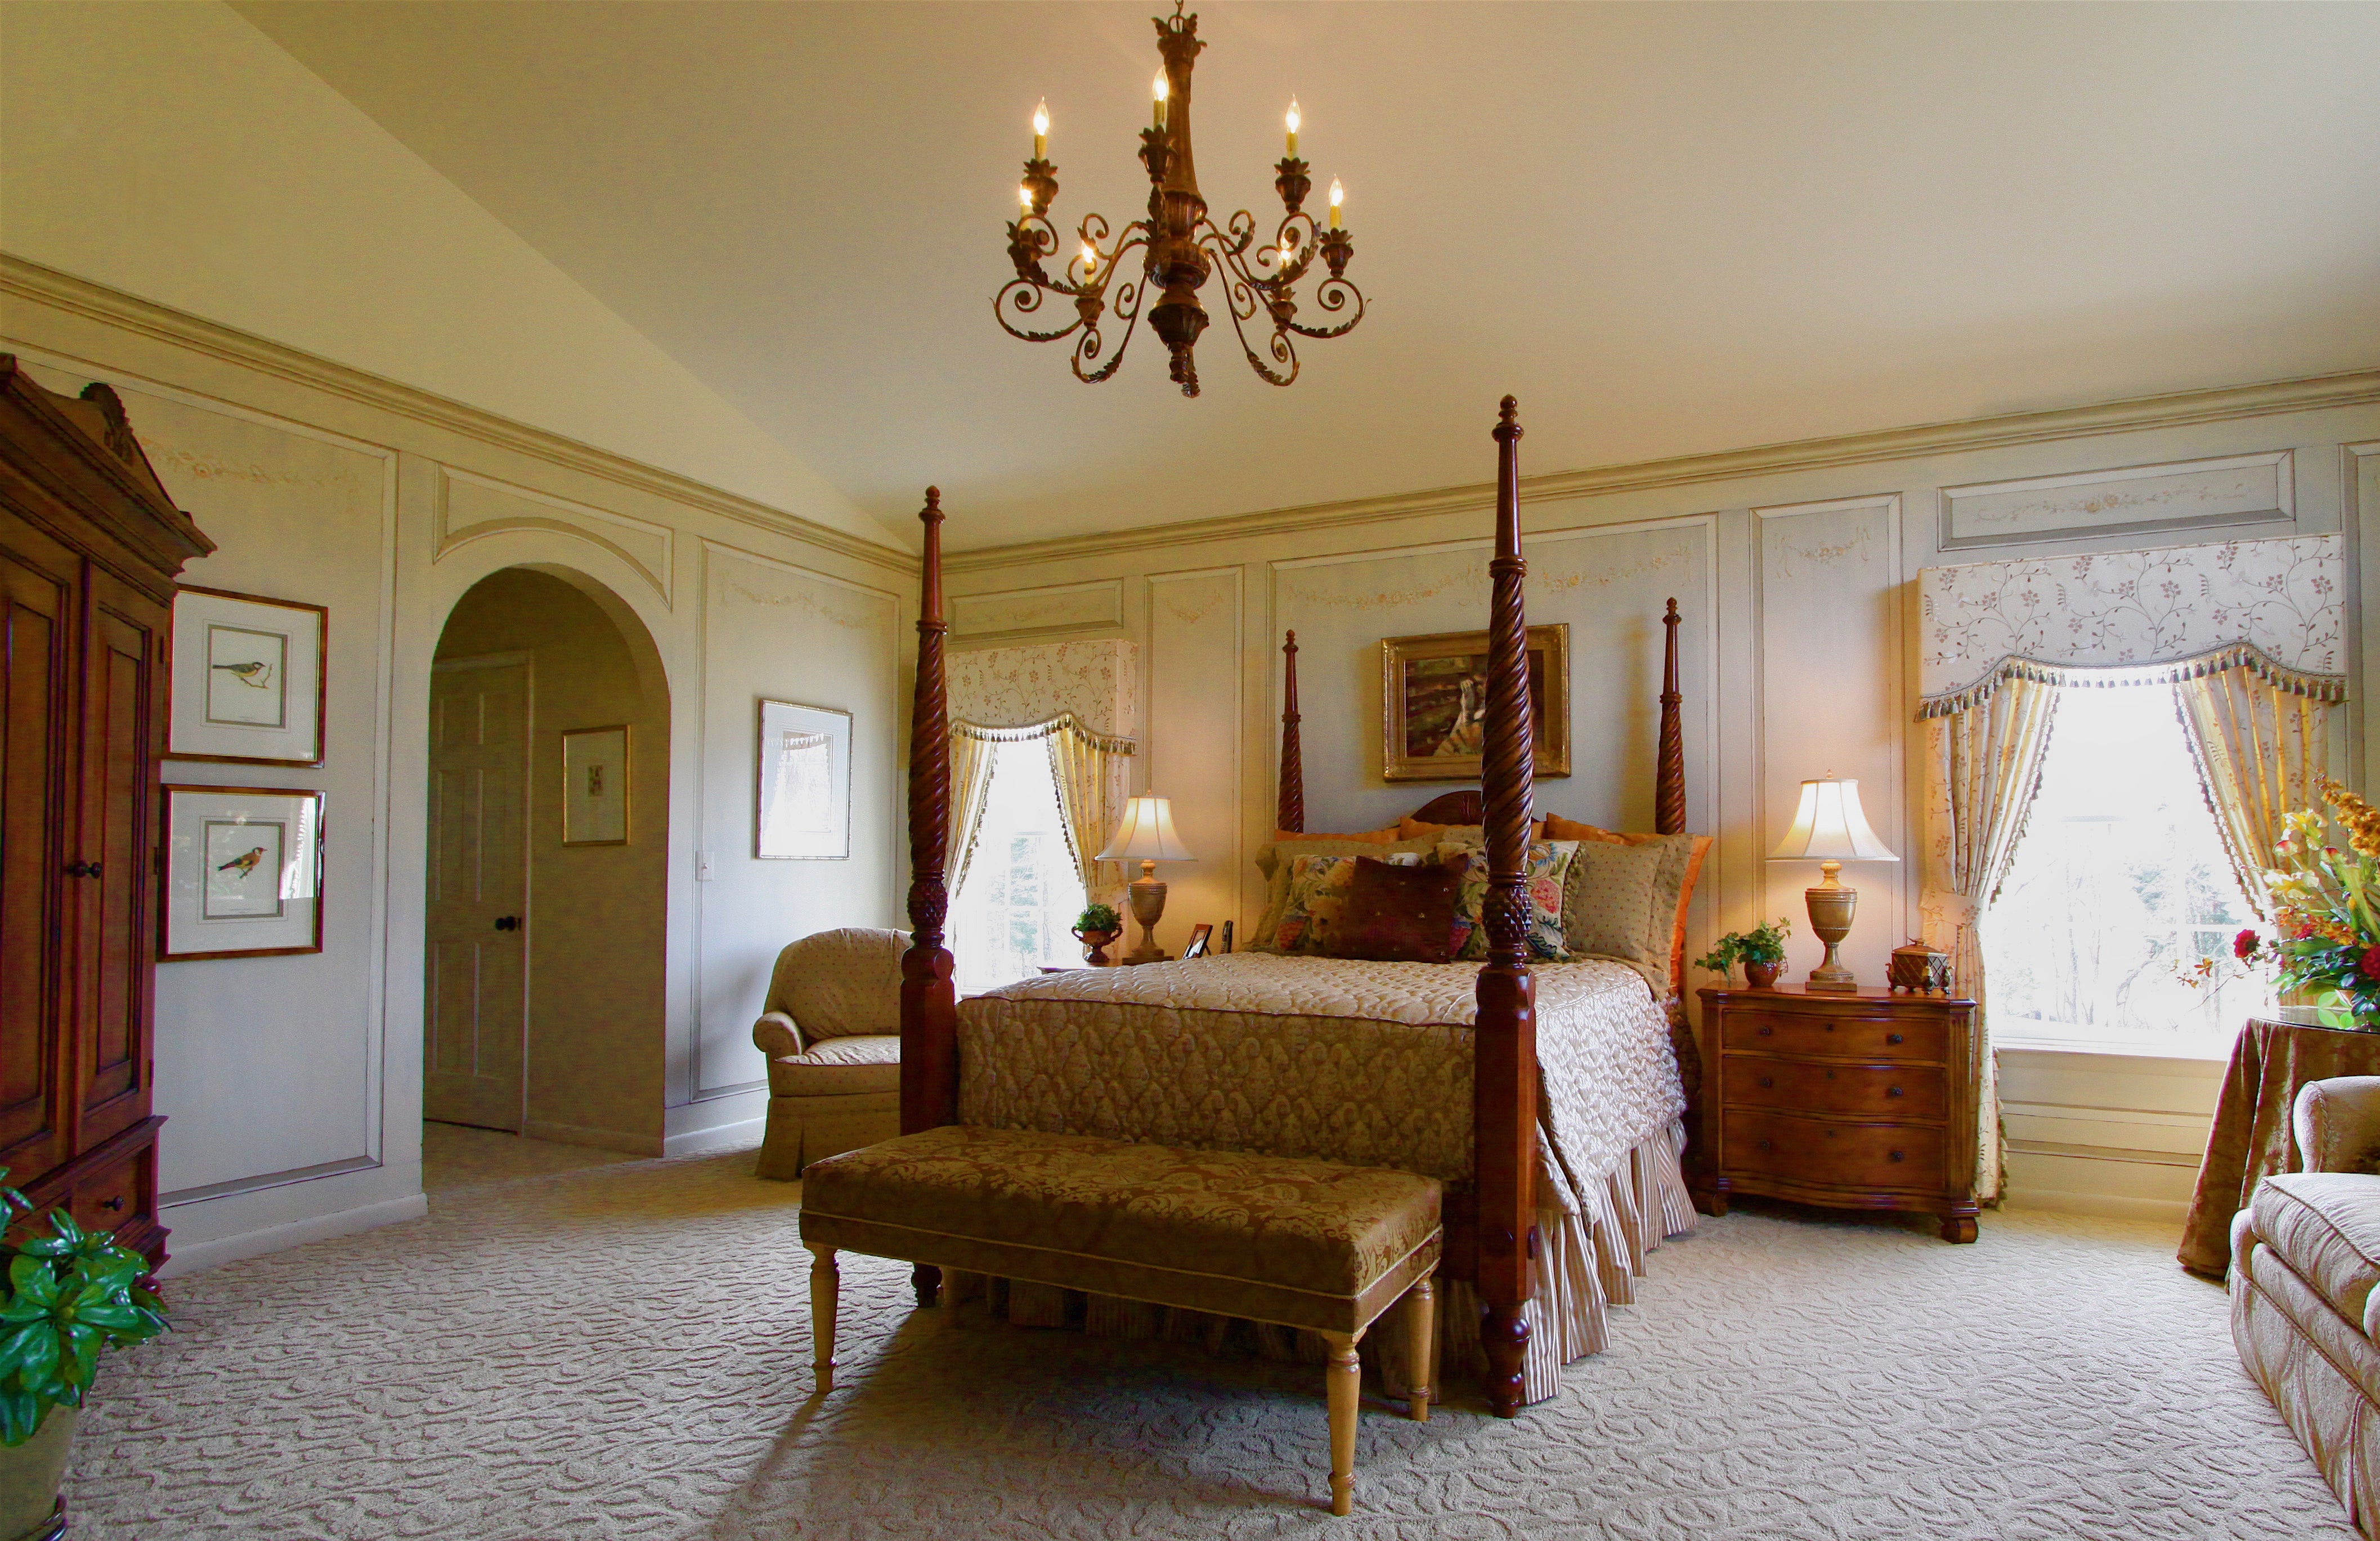 Elegant Bedroom